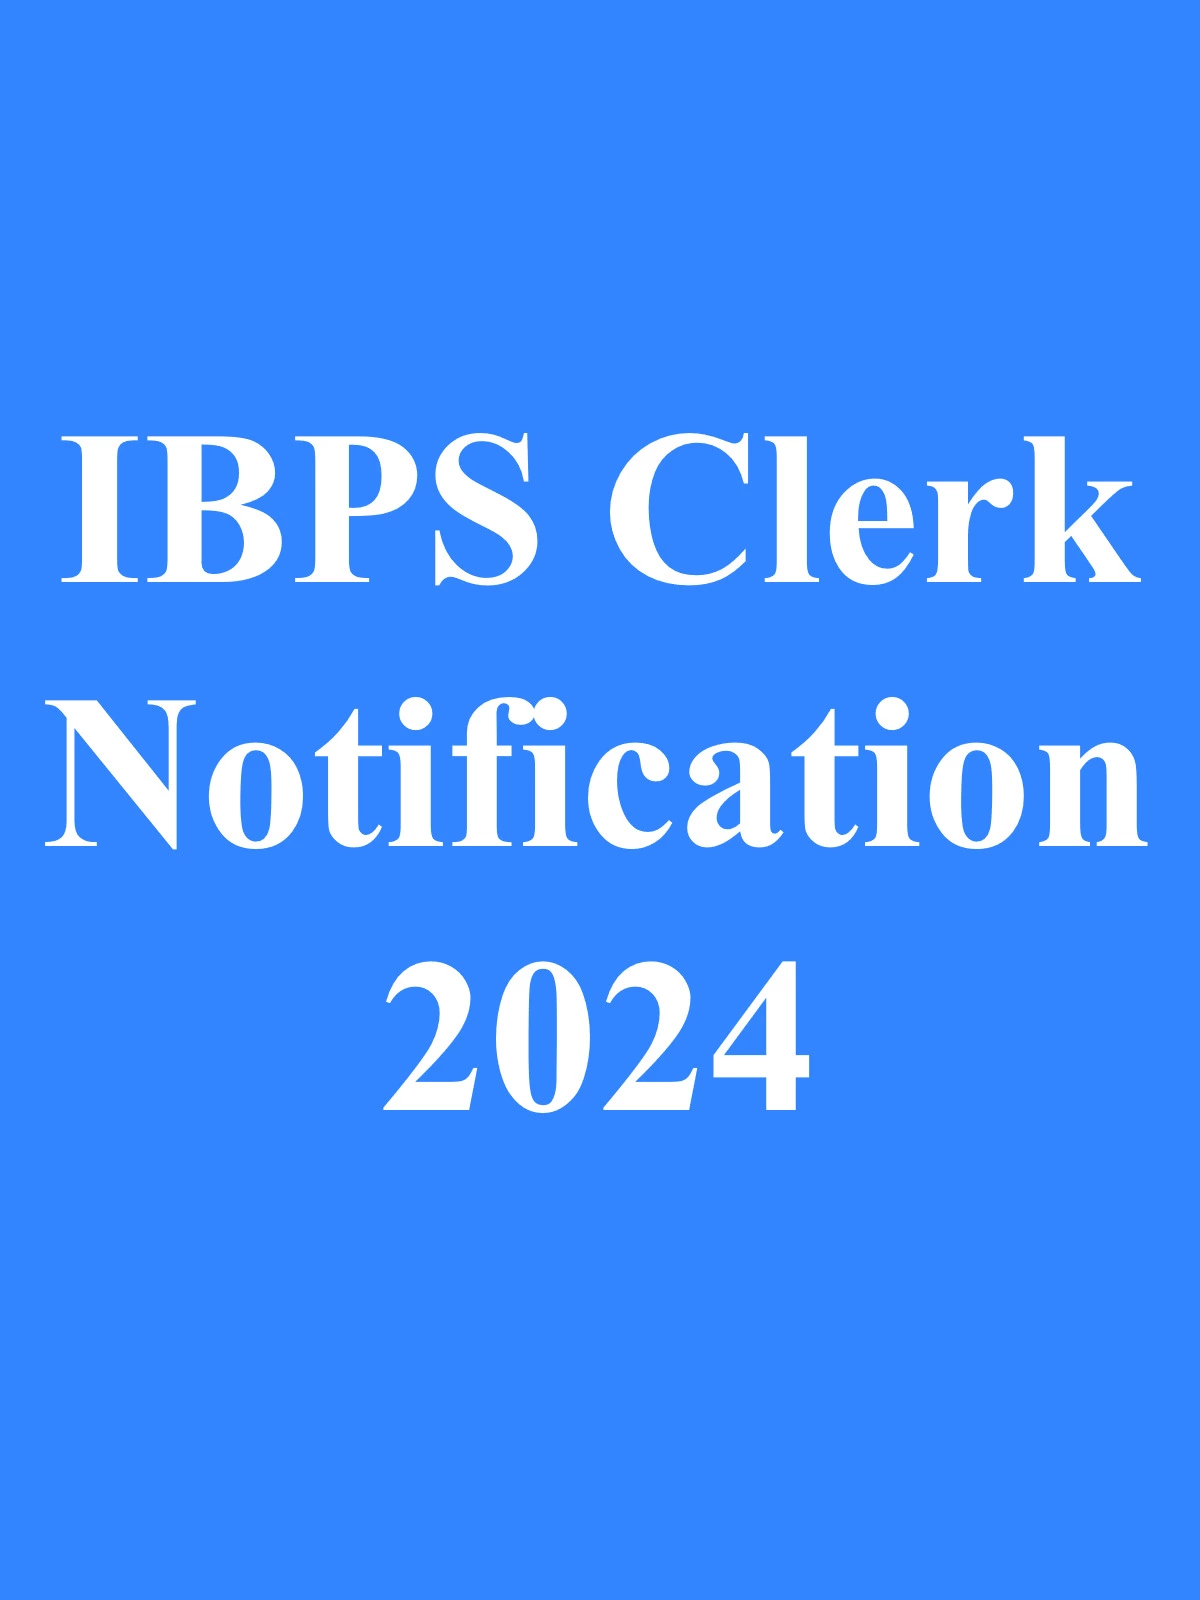 IBPS Clerk 2024 Notification